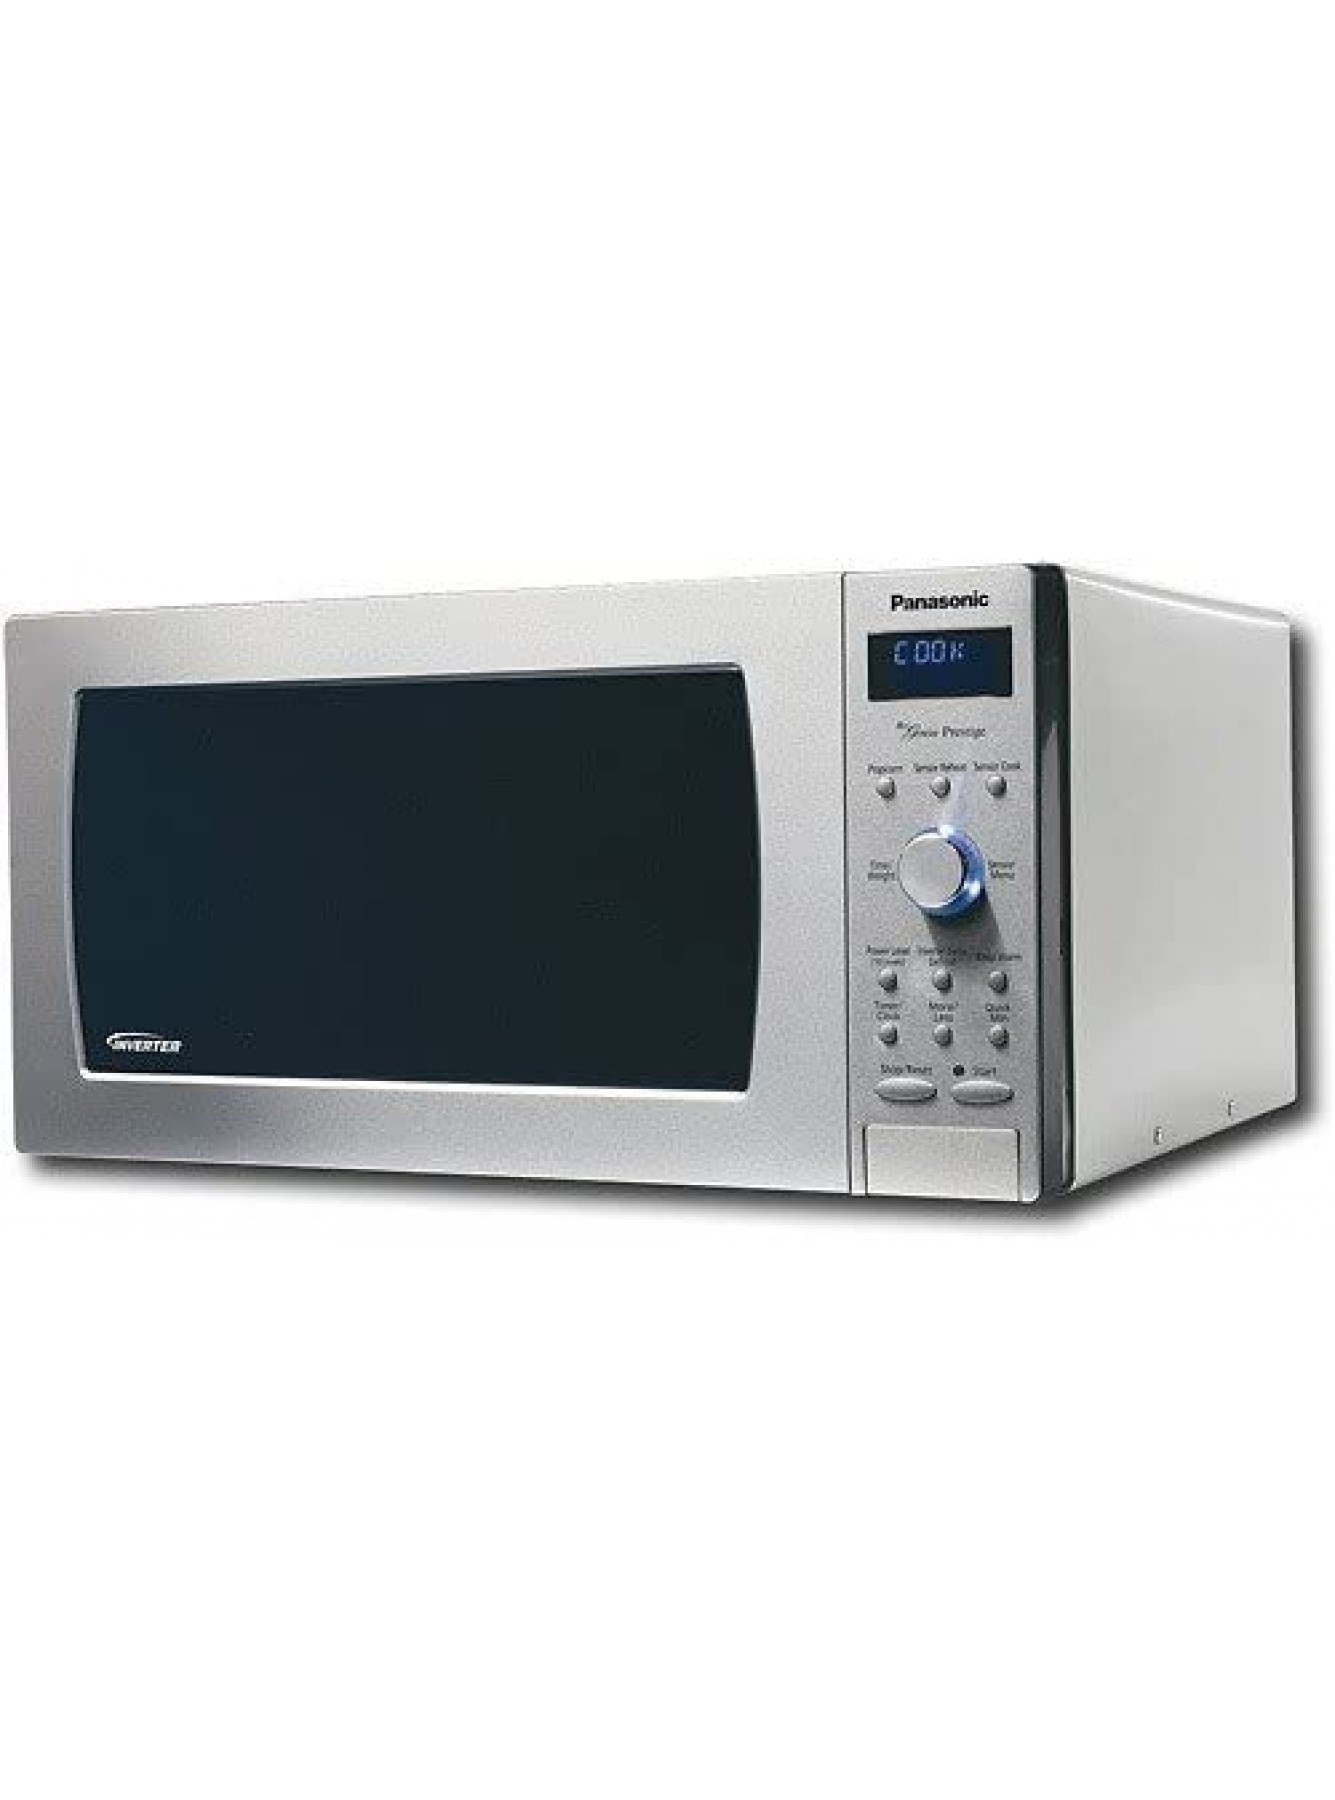 Panasonic NN-SD987SA 1250 watts 2.2 Cu. Ft. Full-Size Microwave Stainless Steel B00LDWYF5U